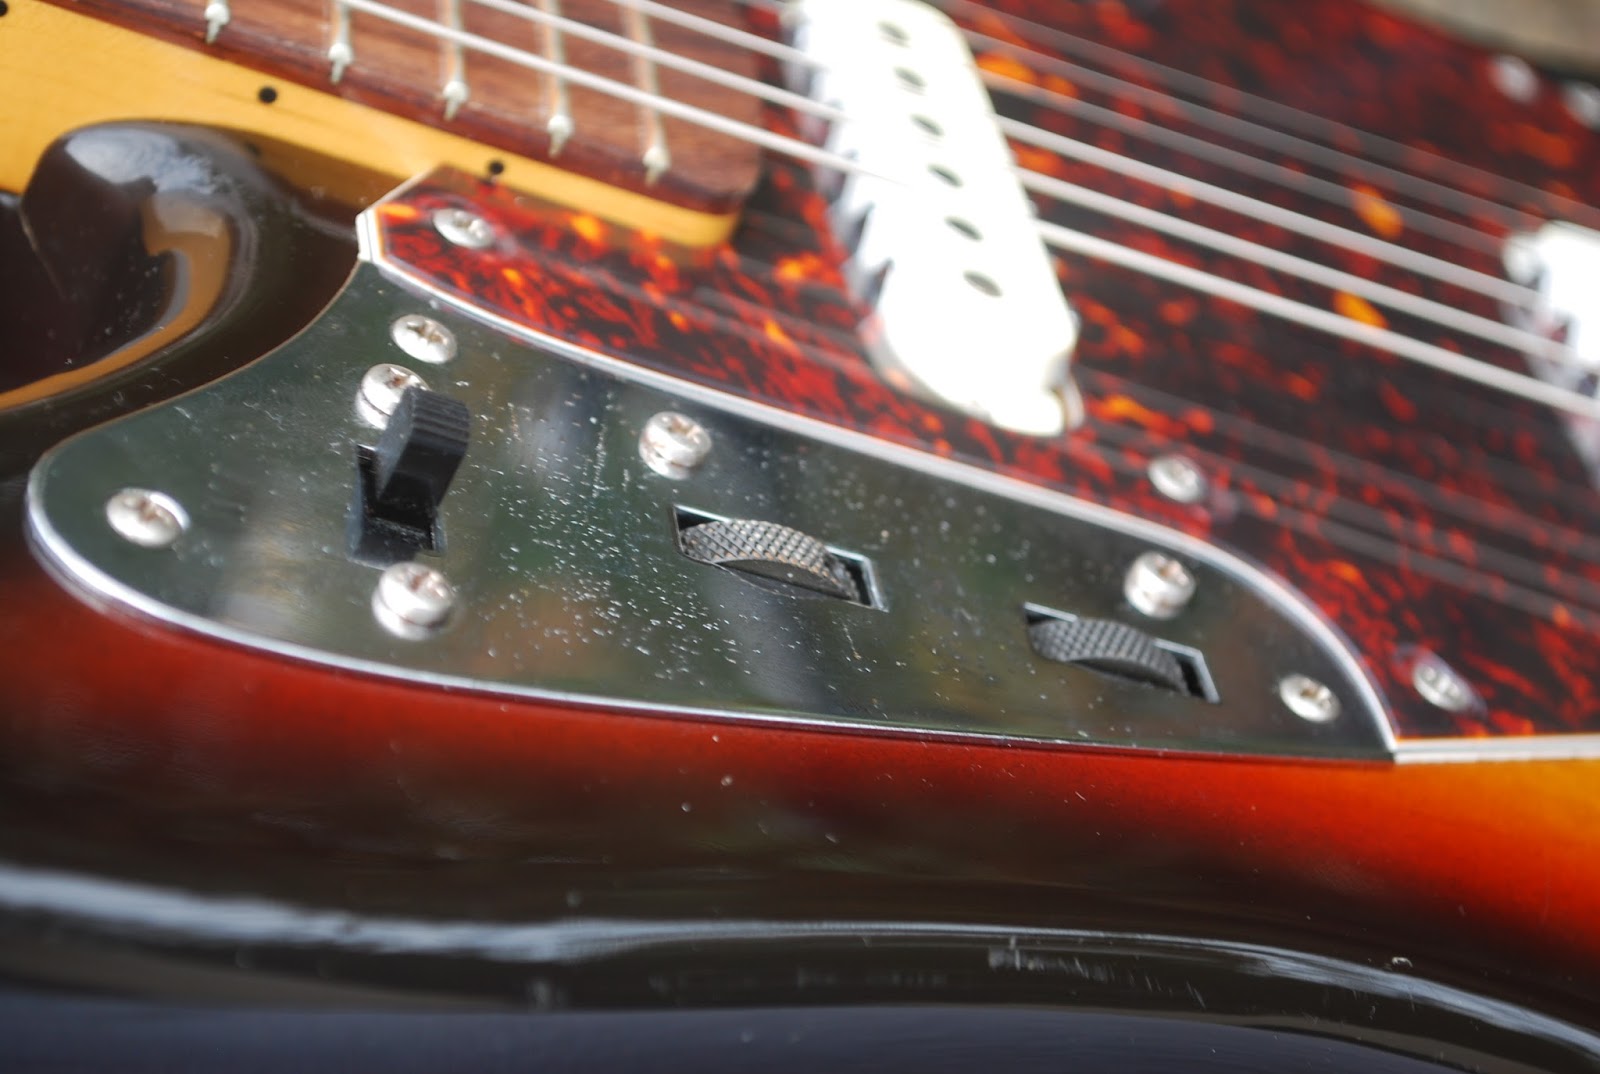 Rex and the Bass: 2003 Fender Jaguar JG66-85 Electric Guitar Review